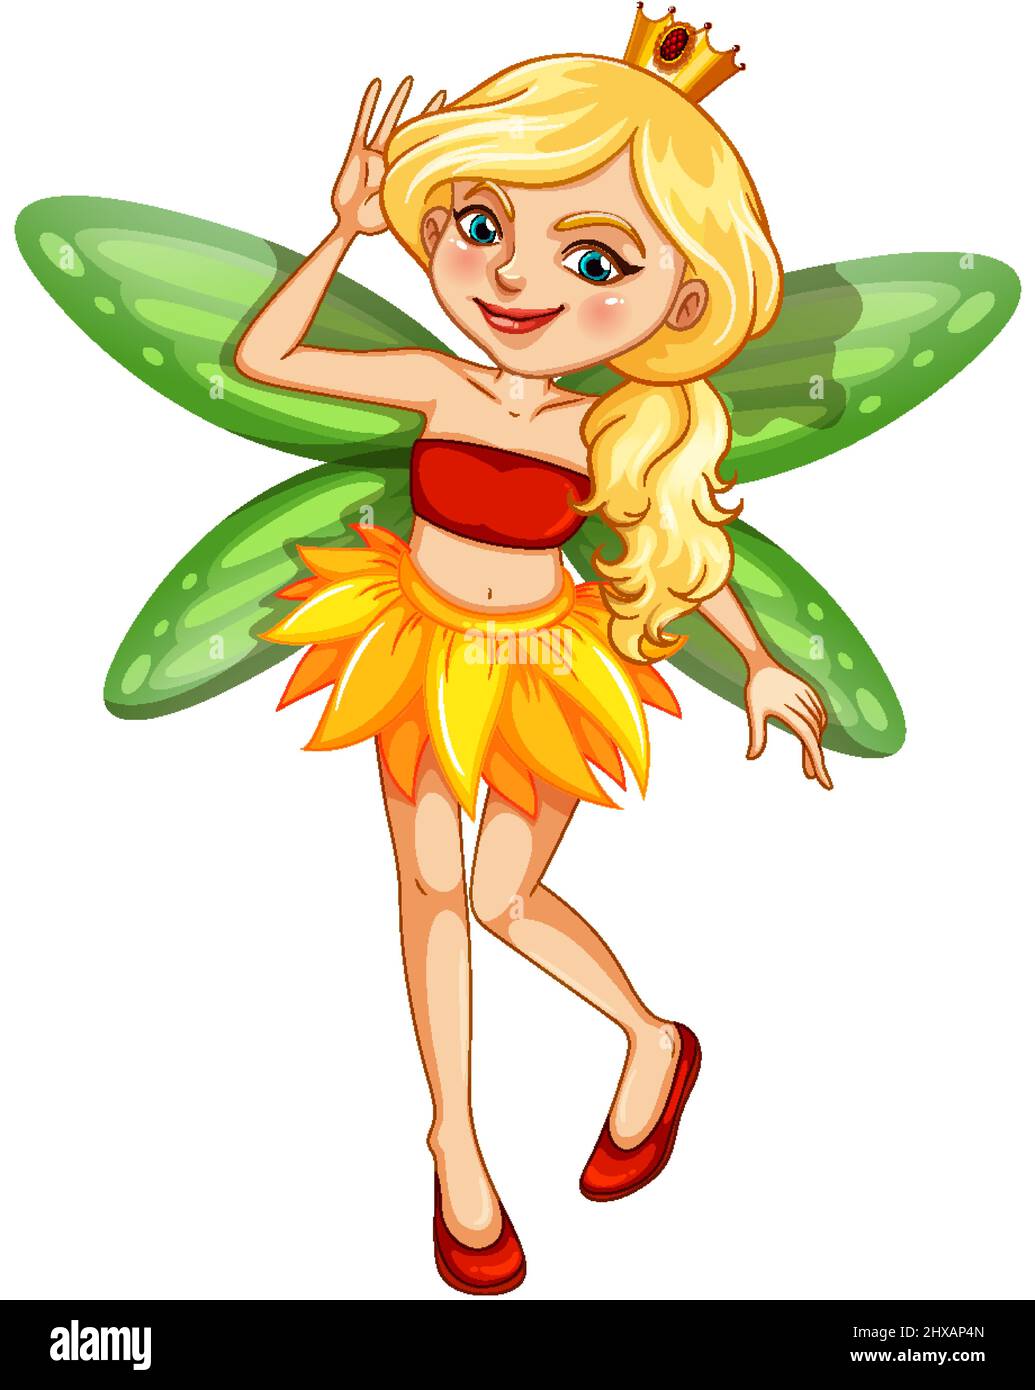 Beautiful fairy girl cartoon character illustration Stock Vector Image ...